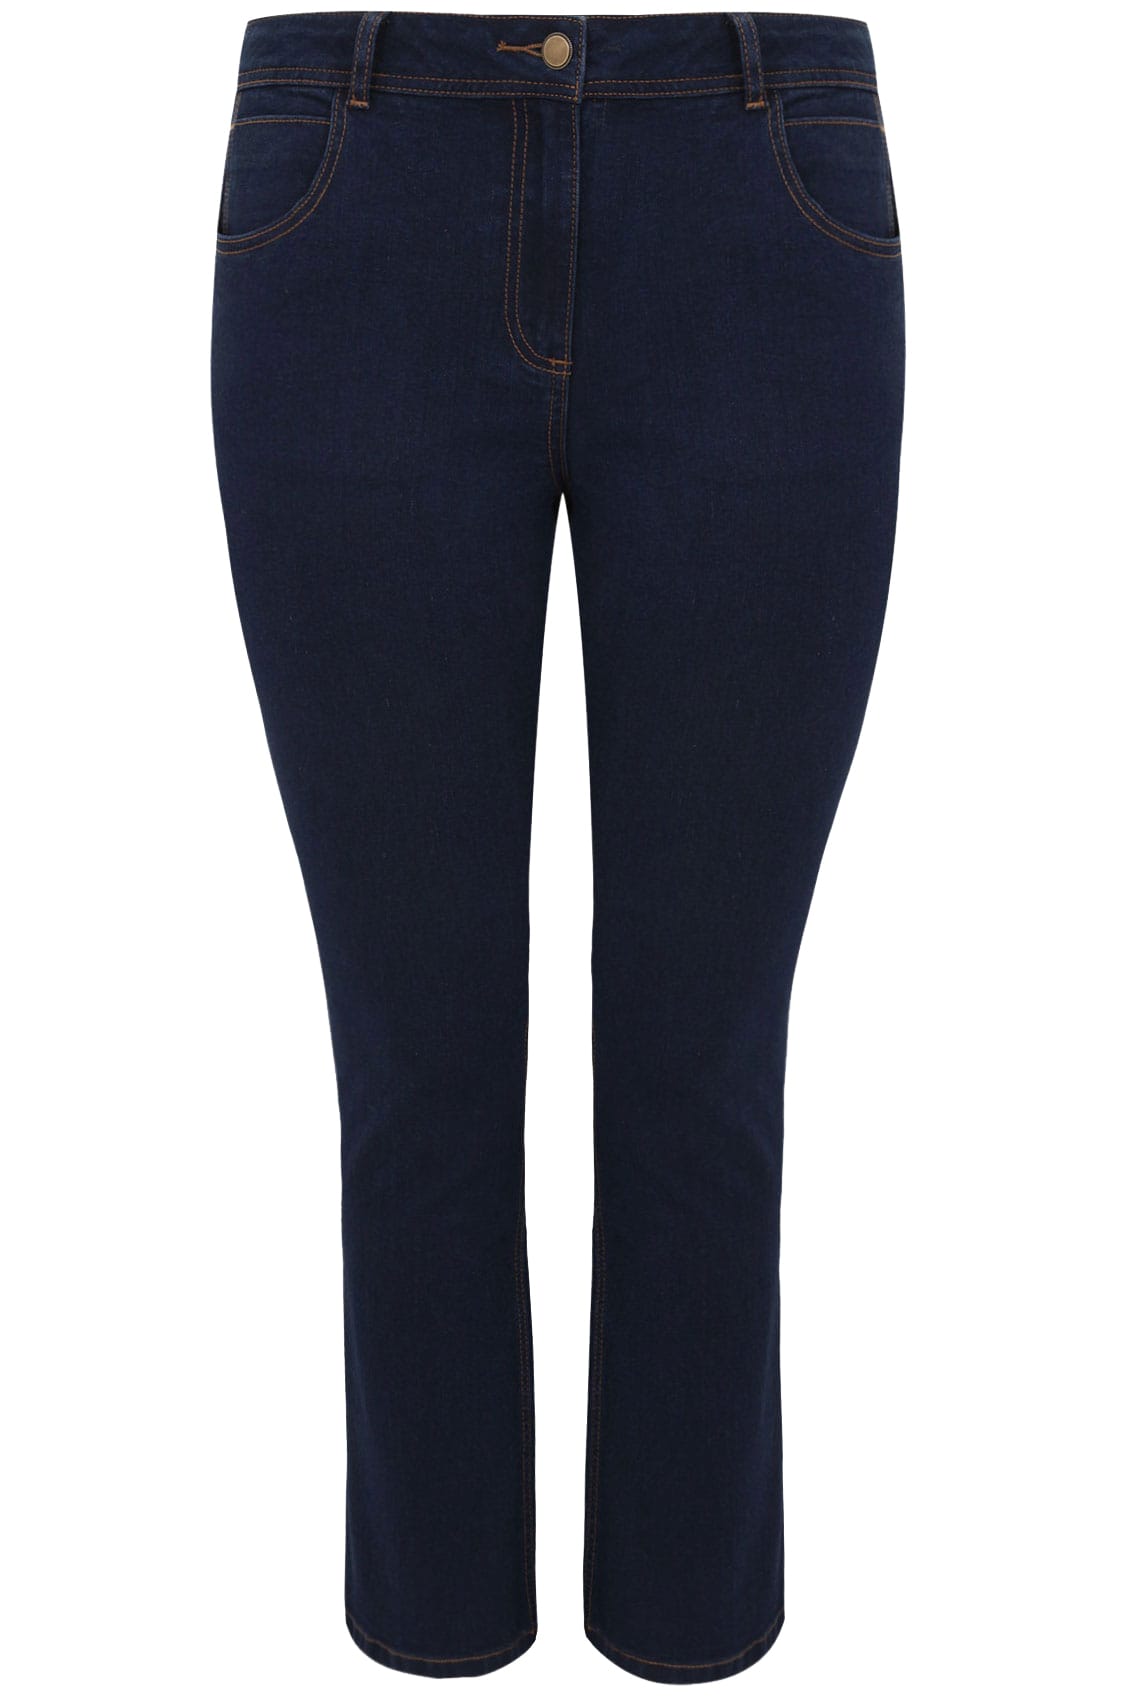 Indigo Blue Straight Leg RUBY Jeans Plus size 14 to 36